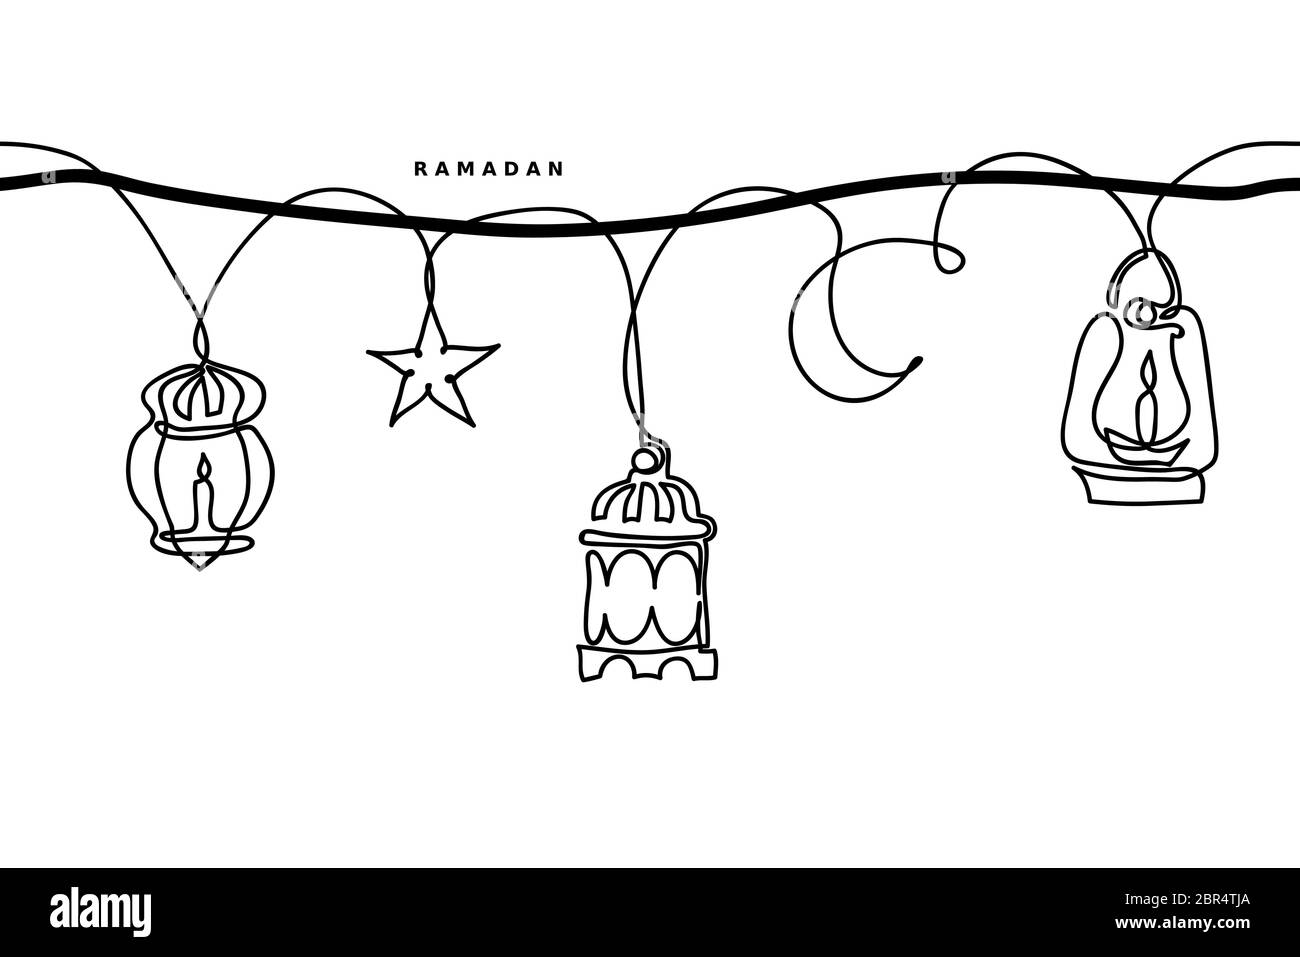 Ramadan simple black and white seamless vector border. Lantern, half moon, star garland. Ramadan minimal one continuous line drawing border Stock Vector